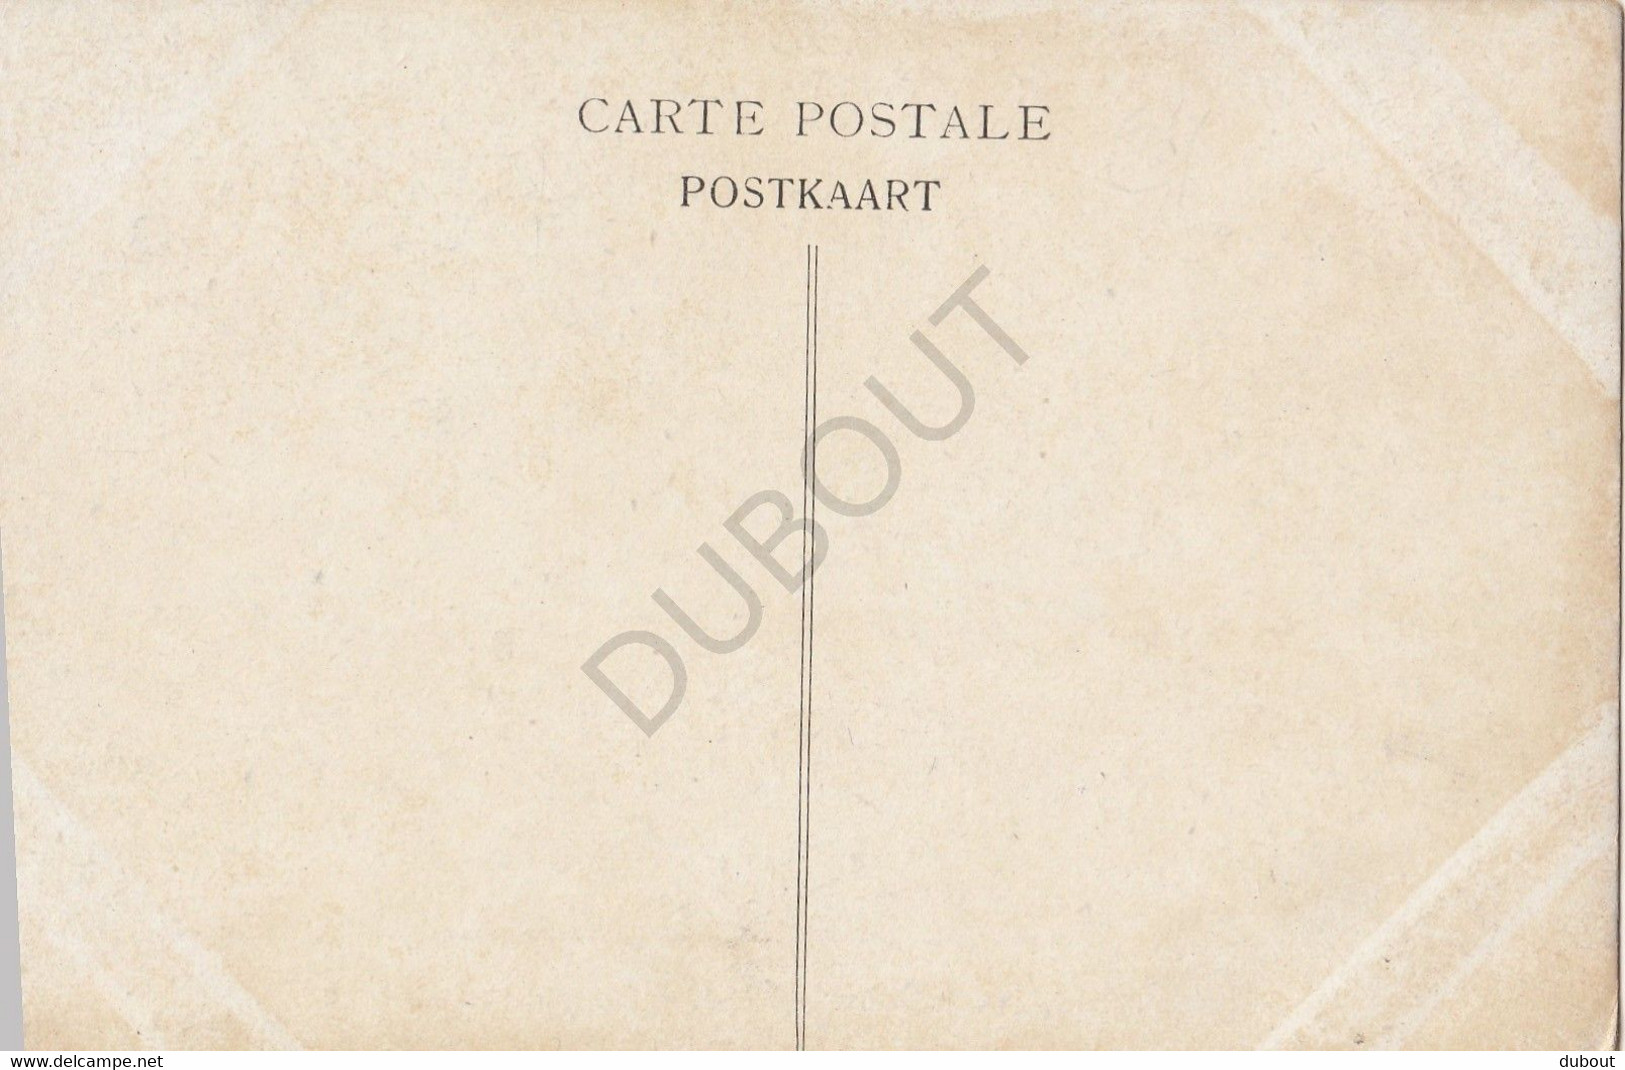 Postkaart-Carte Postale - DUFFEL - Beschieting Van Duffel 1914 - De Groote Steenweg  (C88) - Duffel